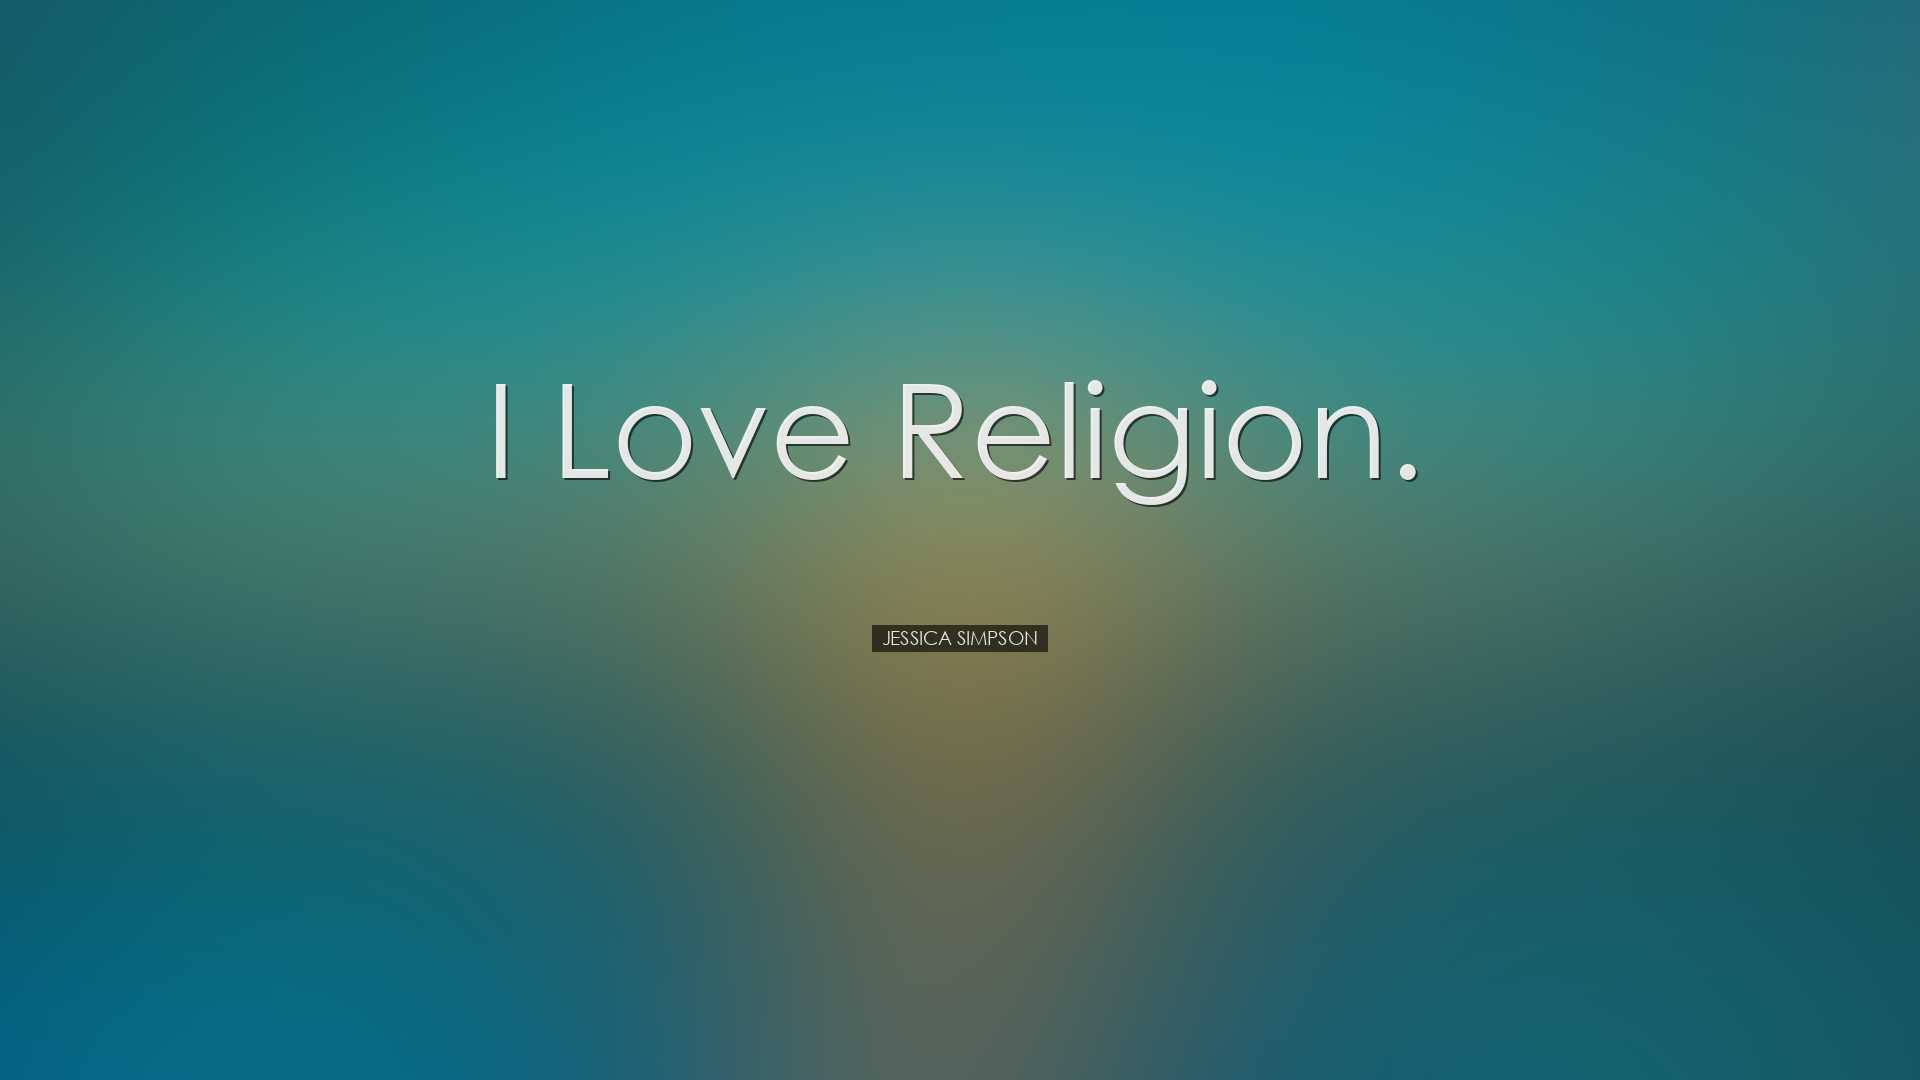 I love religion. - Jessica Simpson